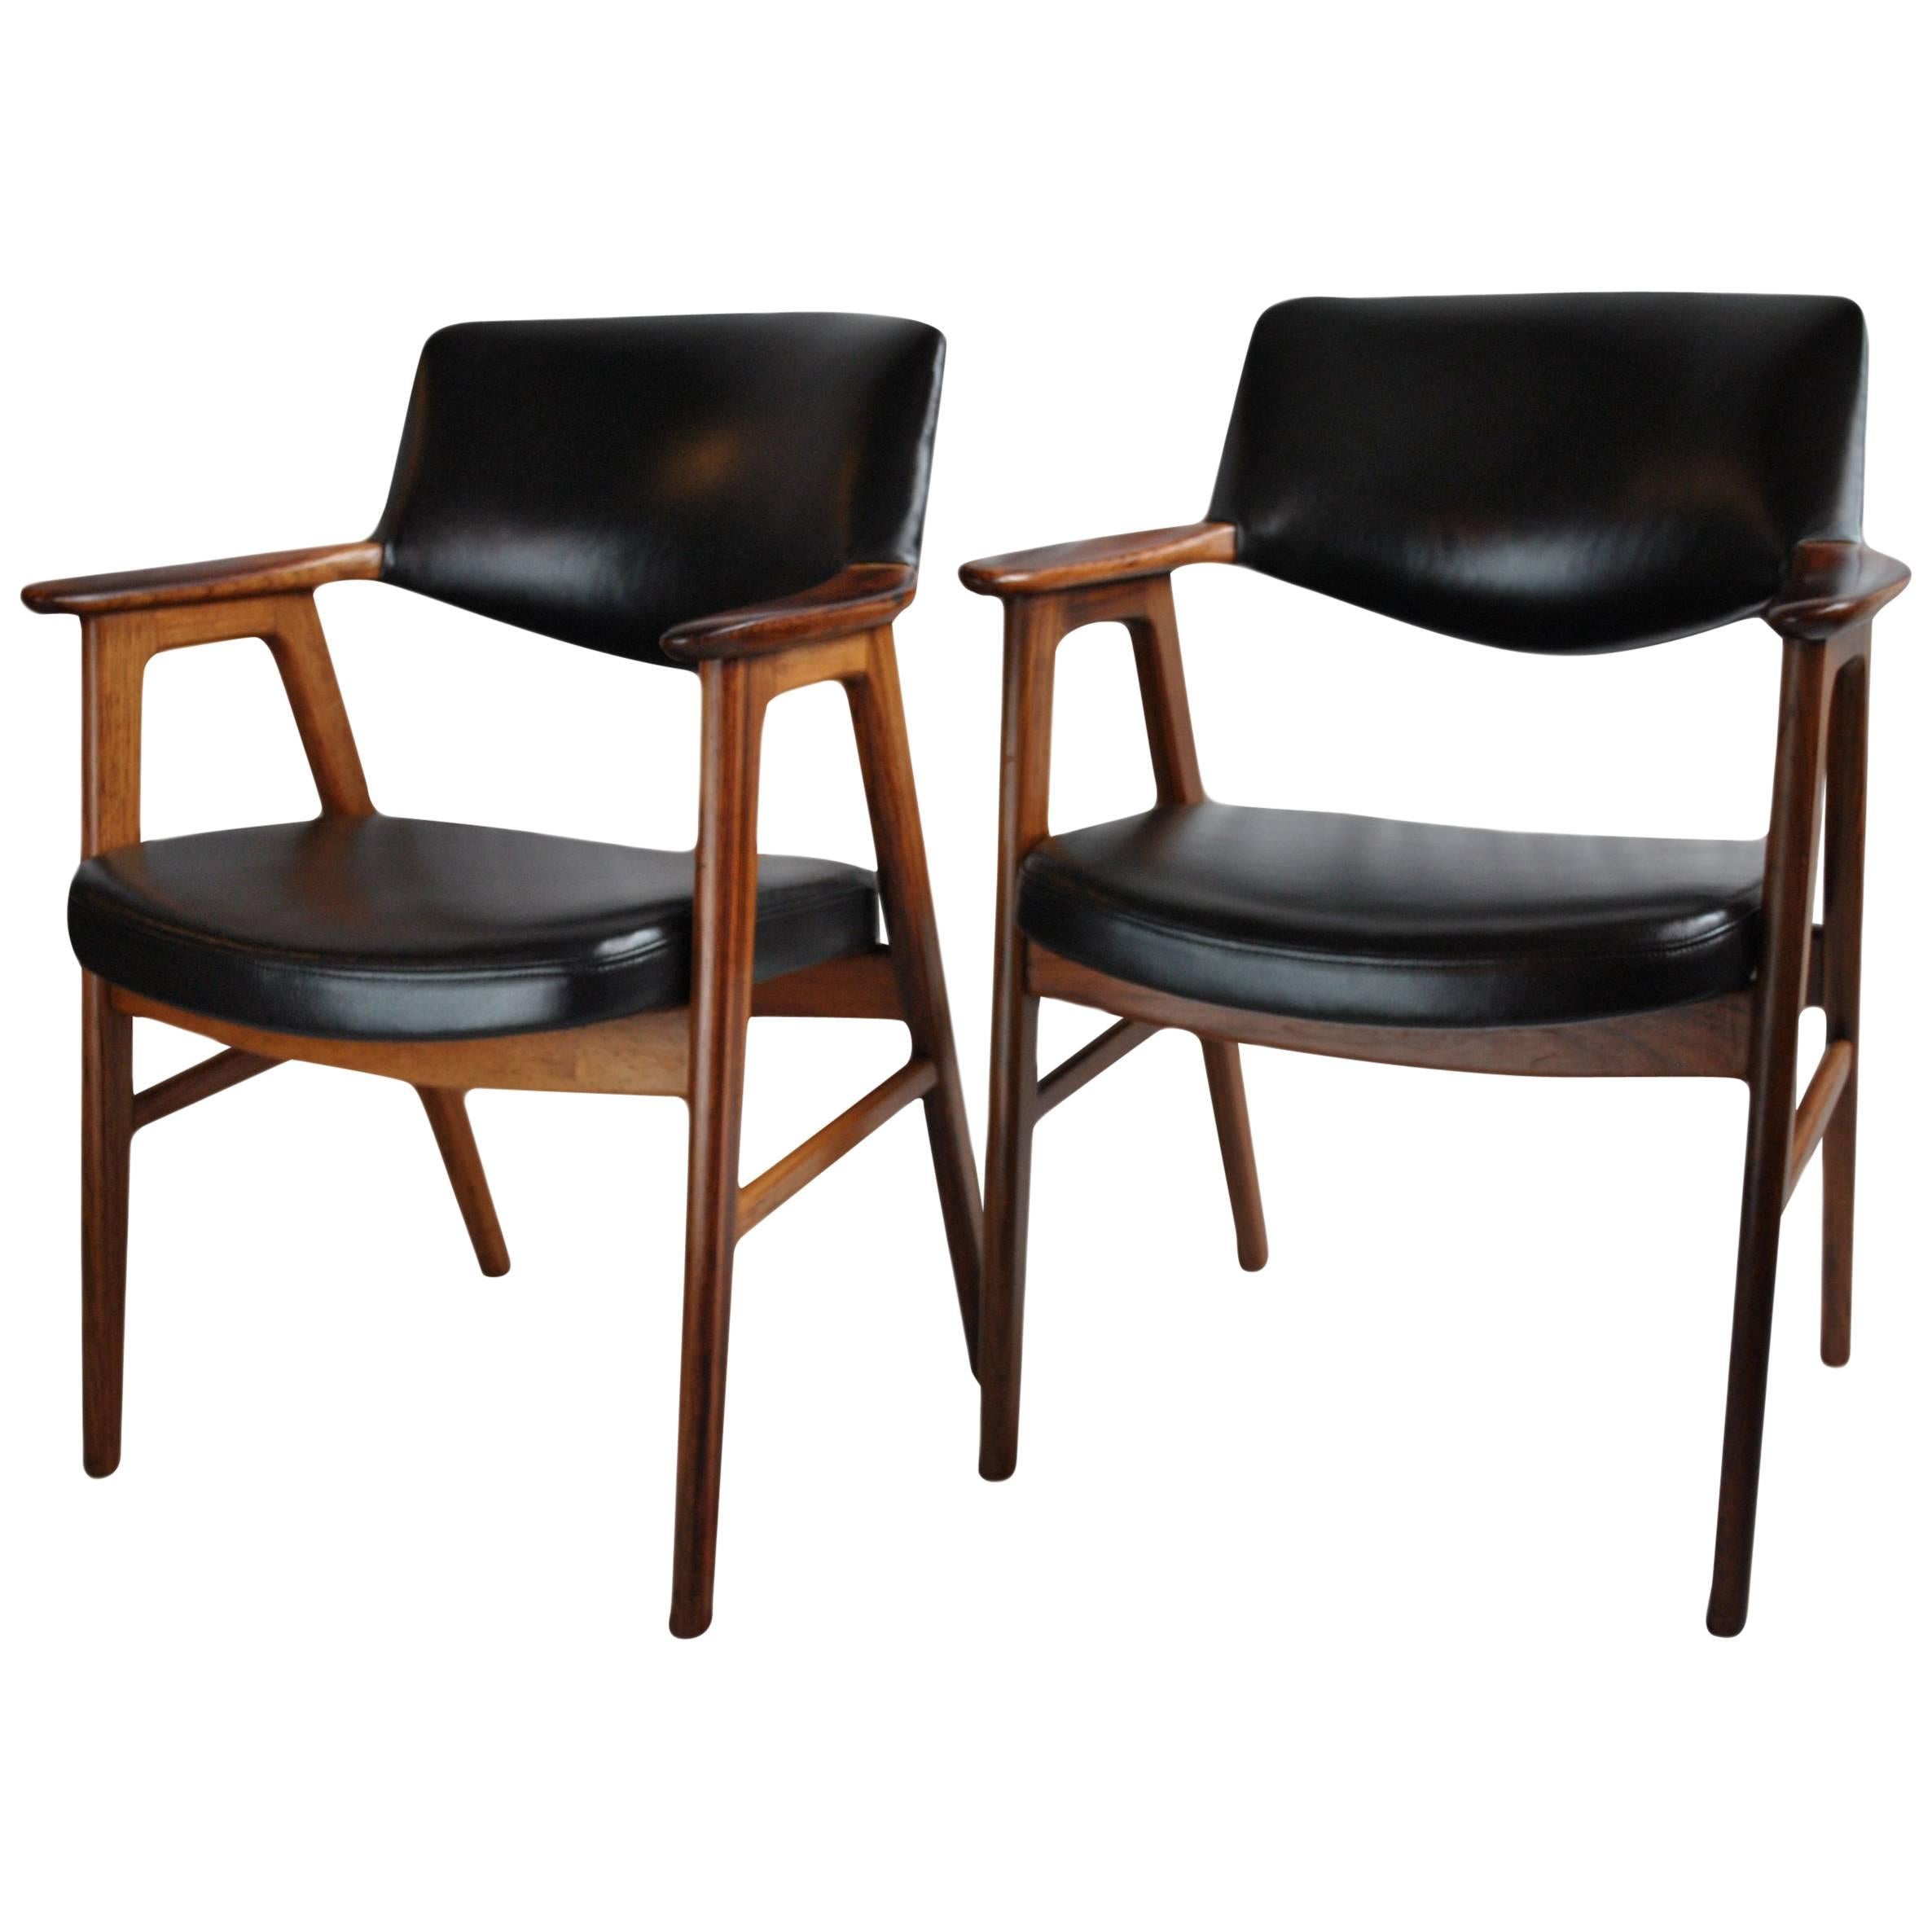 Pair of Fully Restored and Reupholstered Erik Kirkegaard Chairs